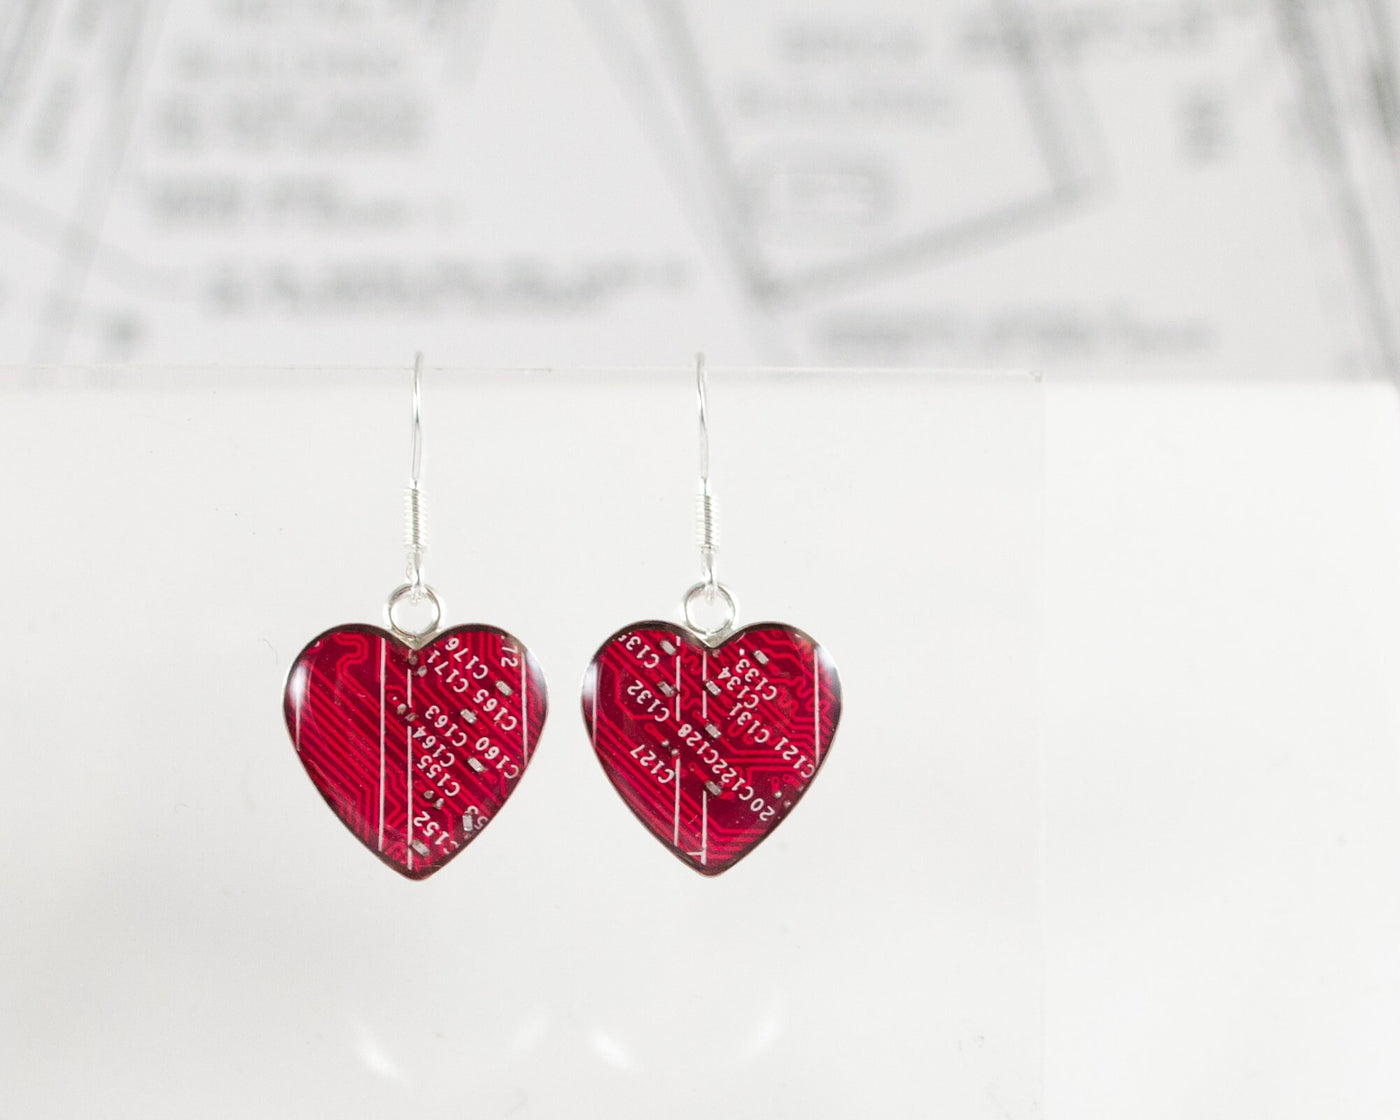 Red Circuit Board Heart Earrings, Medium Size, Electrical Engineer Earrings, Computer Scientist Jewelry, Gift for Scientist, Techie Earrings